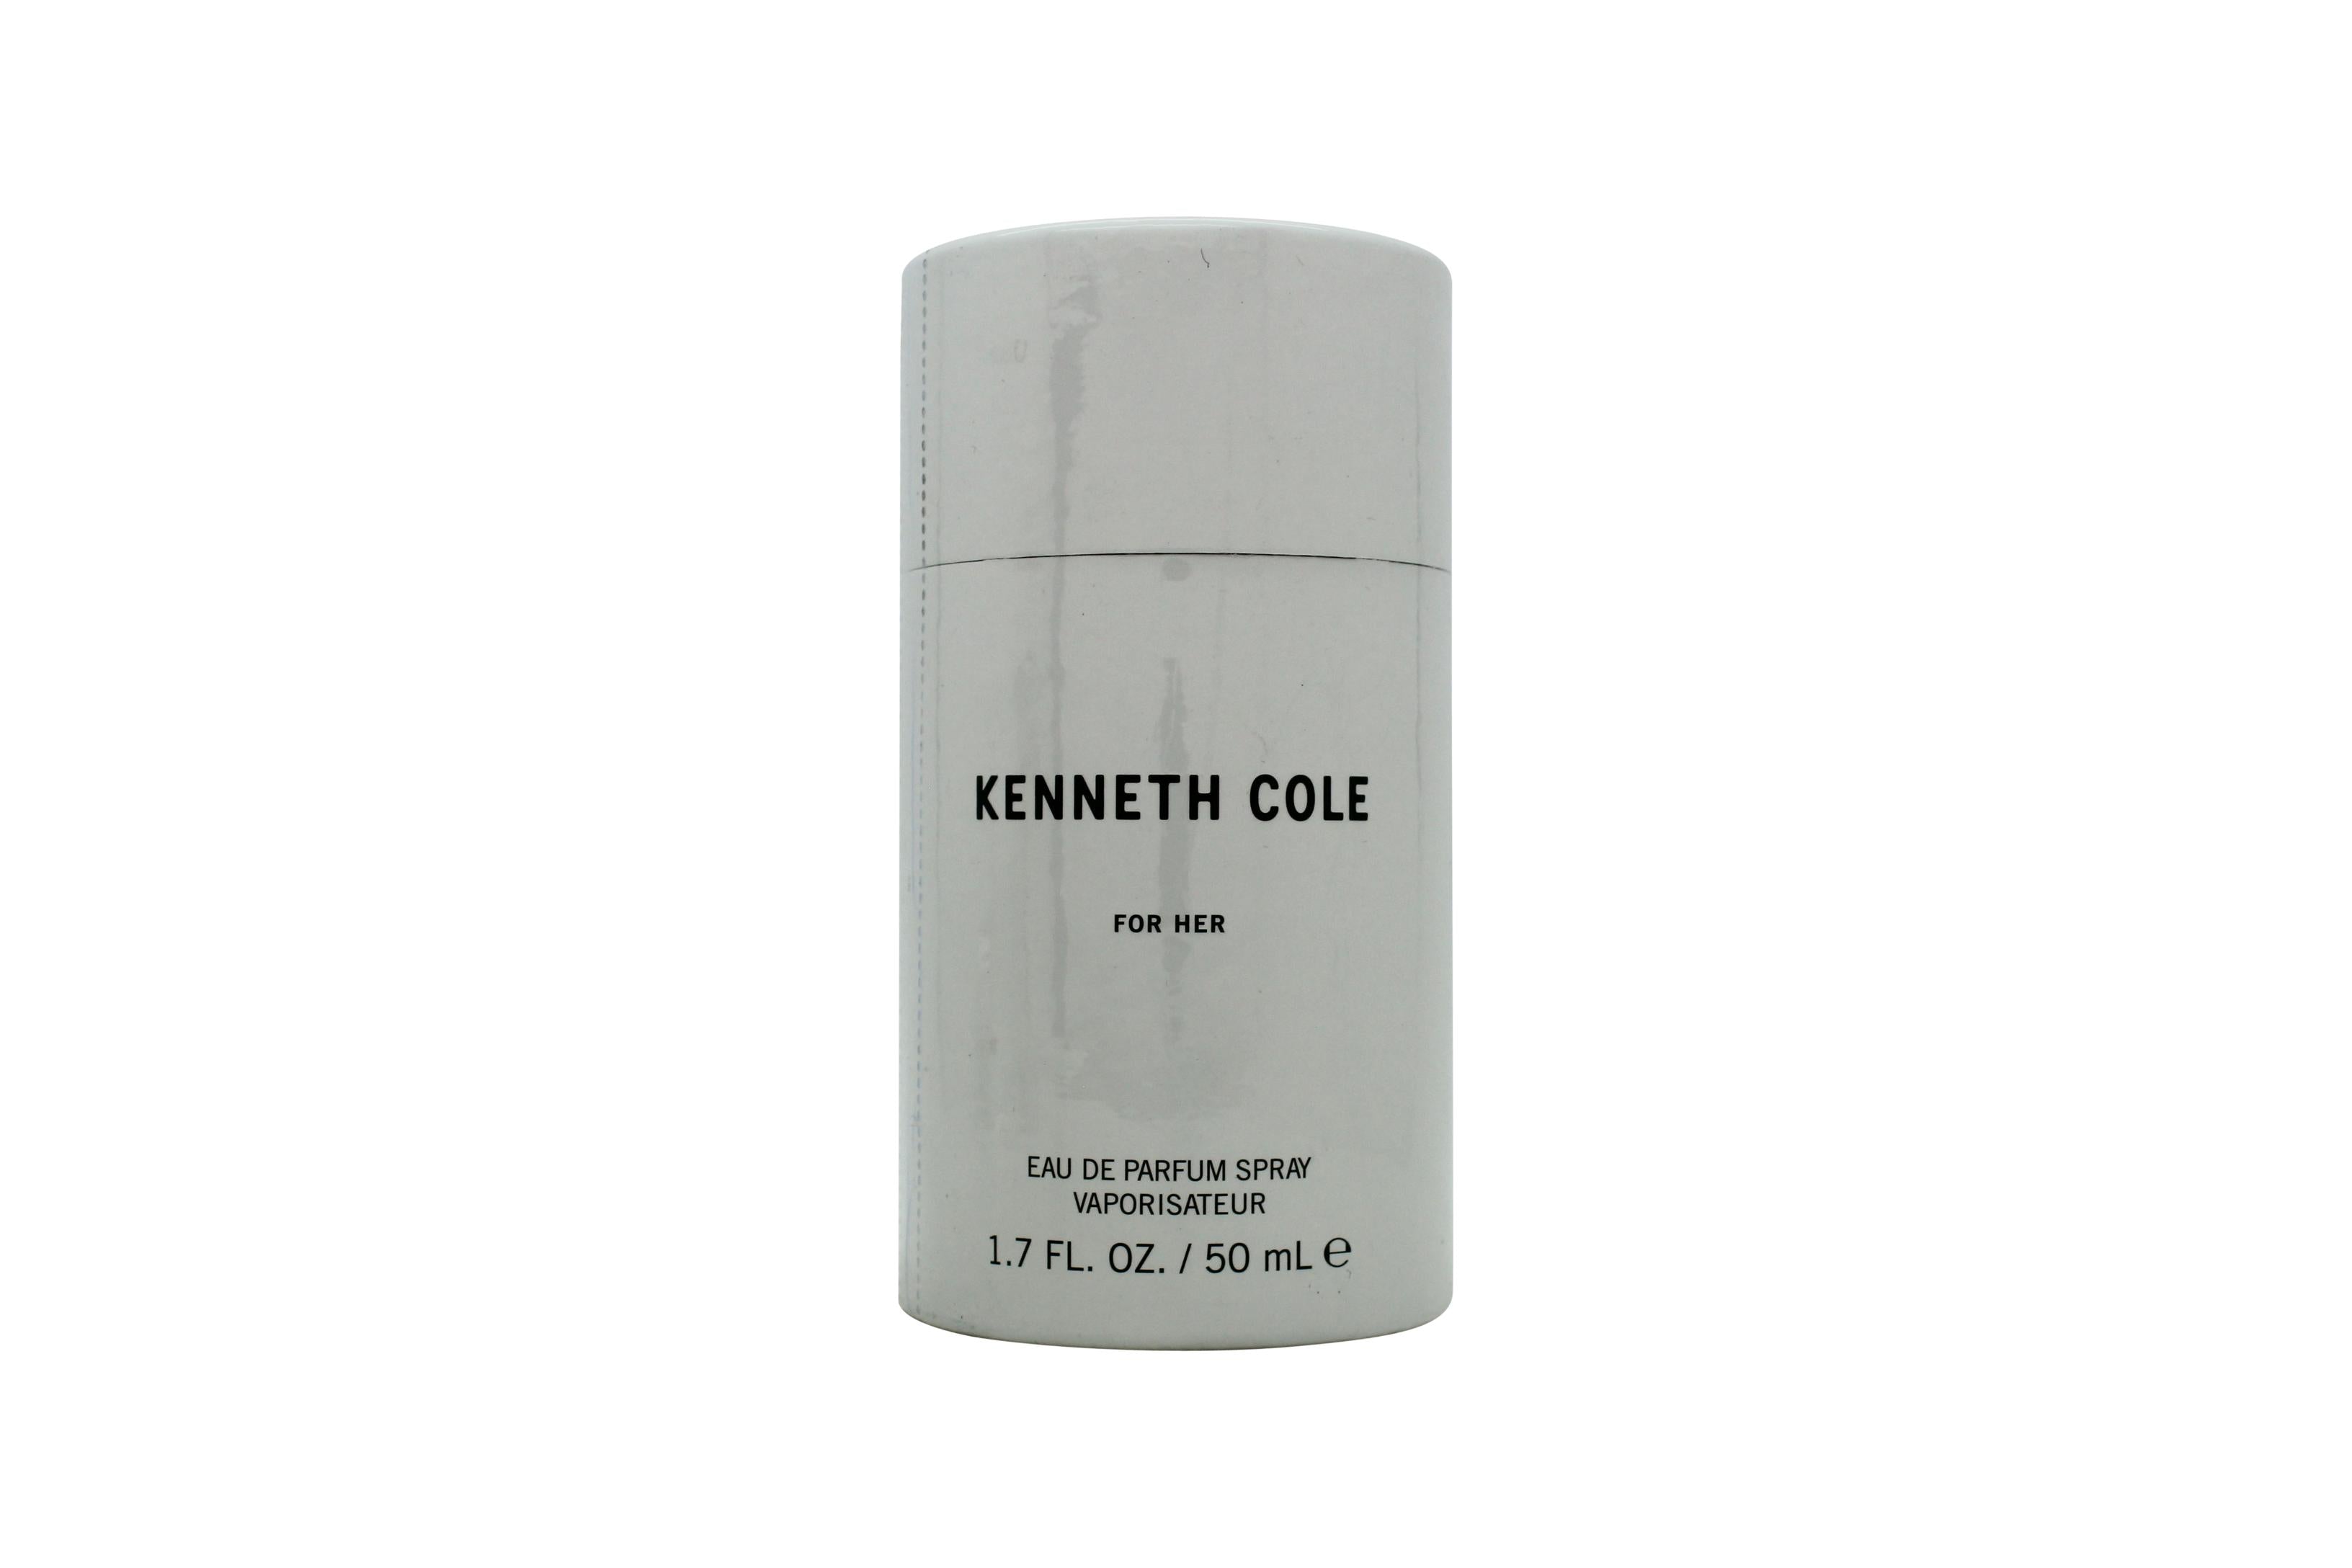 View Kenneth Cole For Her Eau de Parfum 50ml Spray information